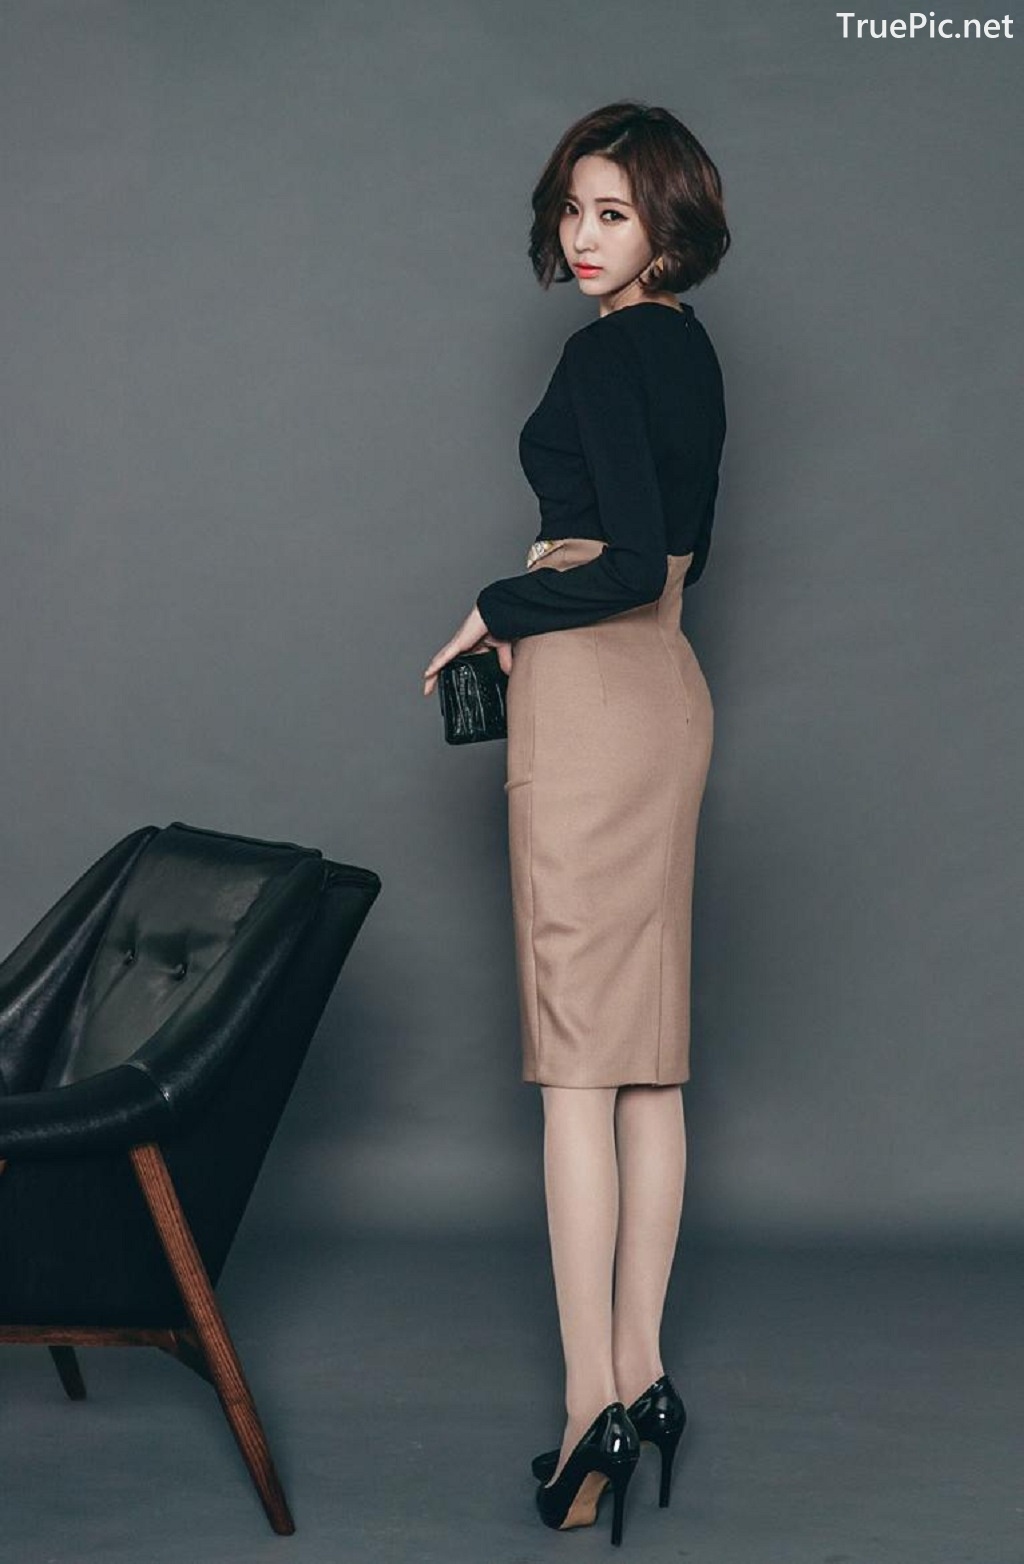 Image Ye Jin - Korean Fashion Model - Studio Photoshoot Collection - TruePic.net - Picture-18